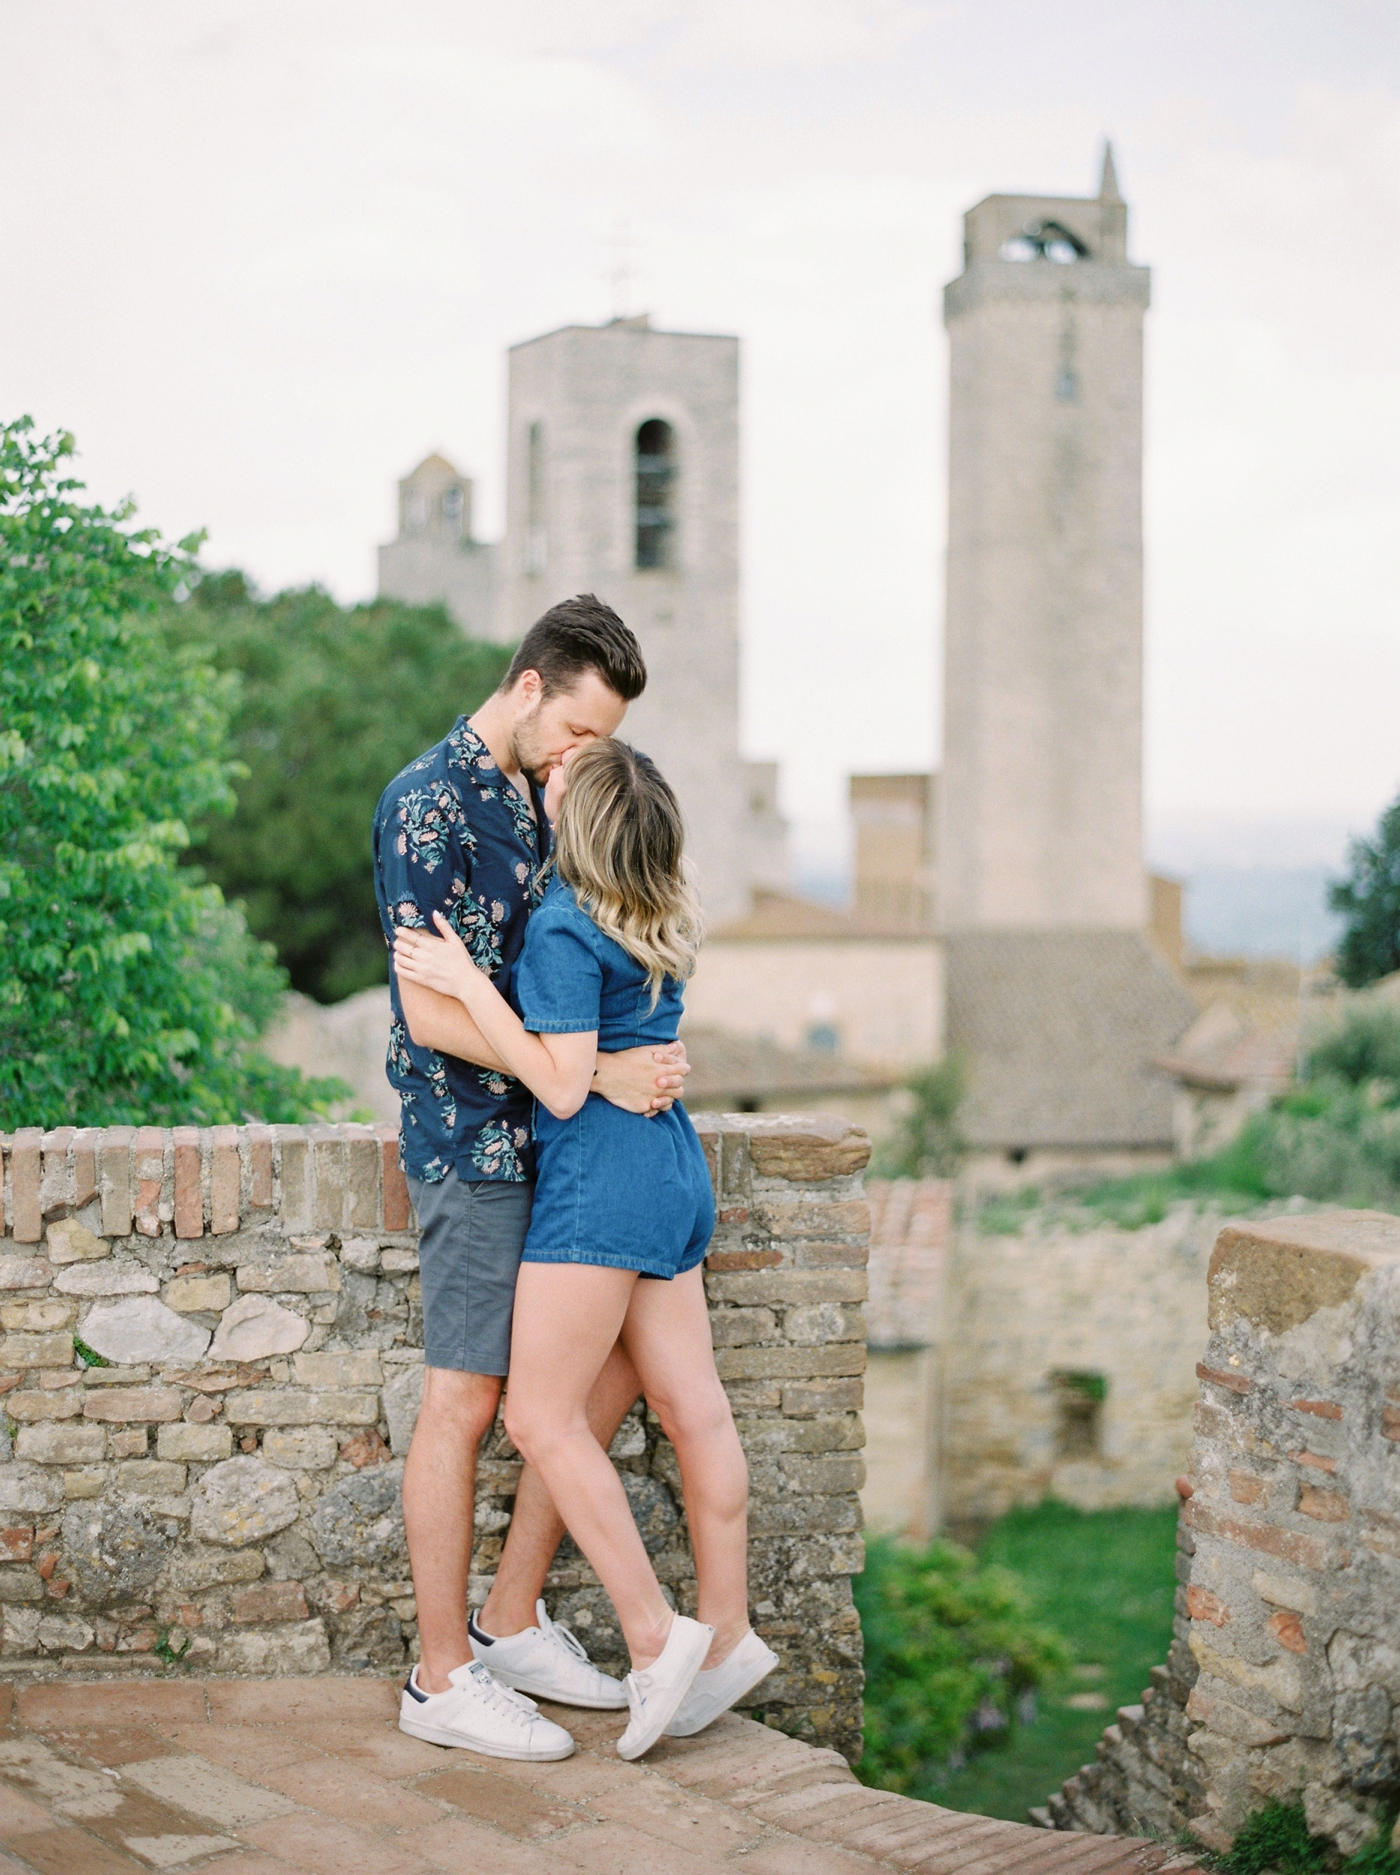 Italy wedding photographers | couples session fashion blogger life set sail | Justine milton fine art film photographer